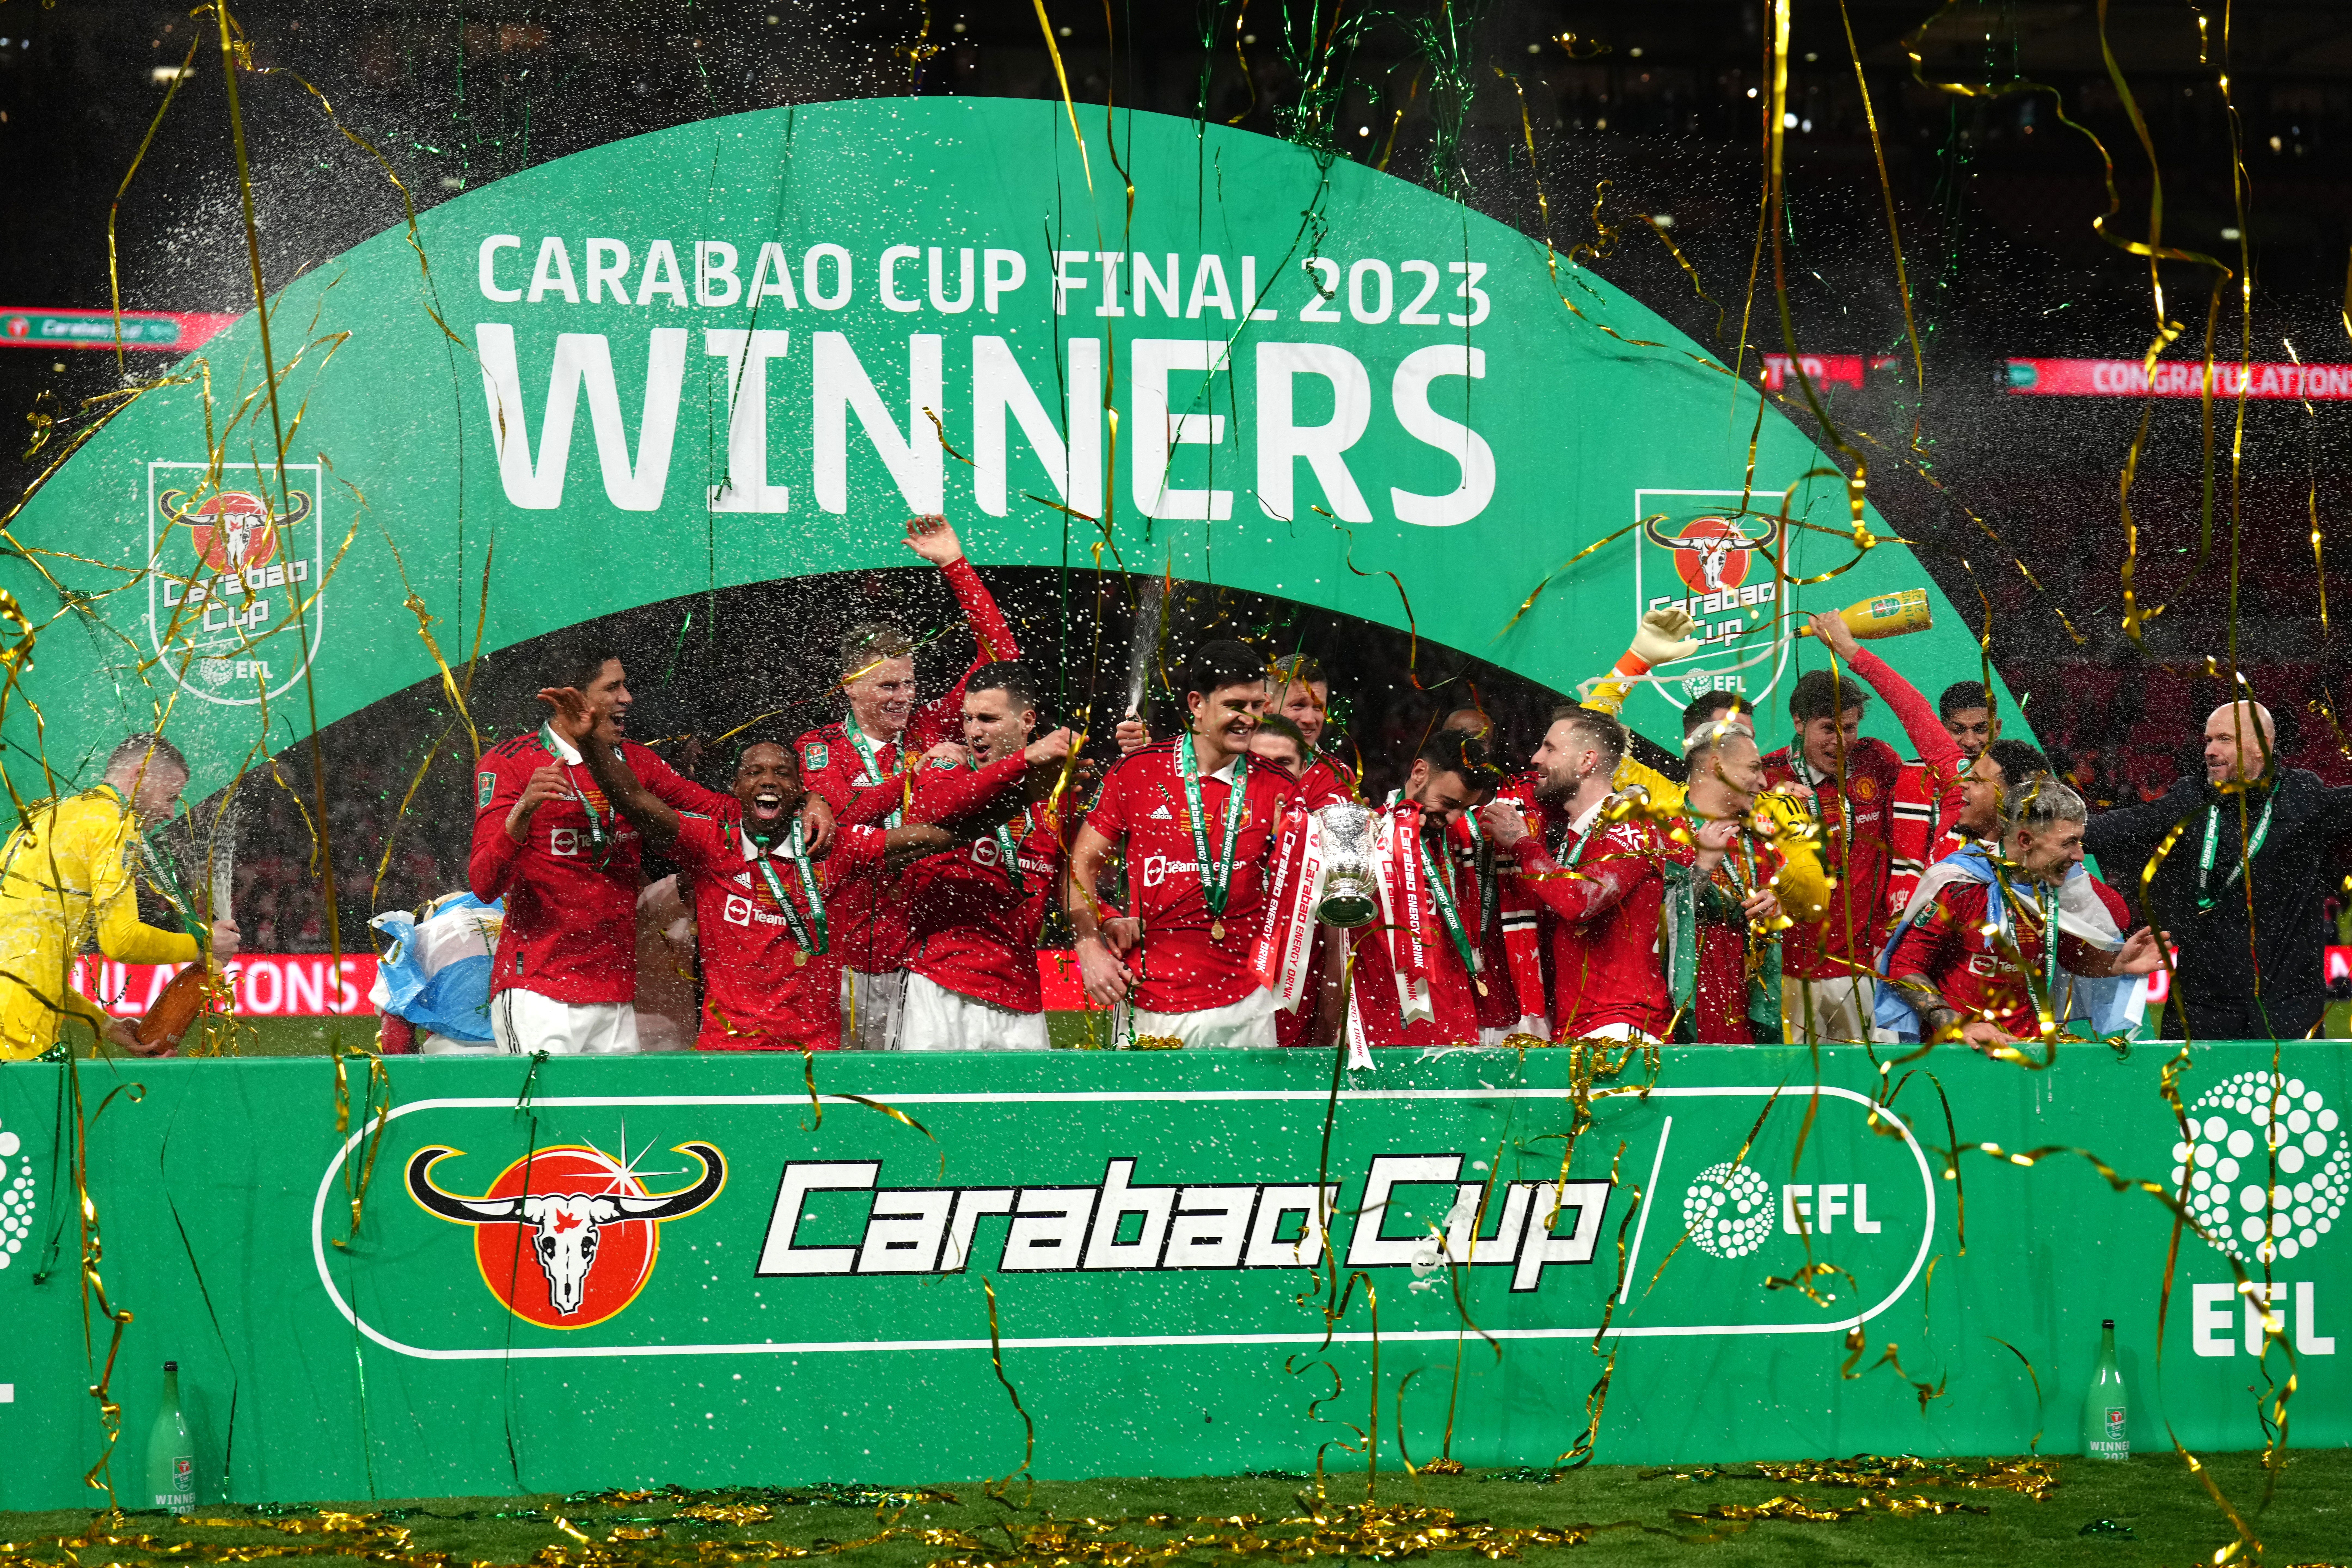 Manchester United won the Carabao Cup last season